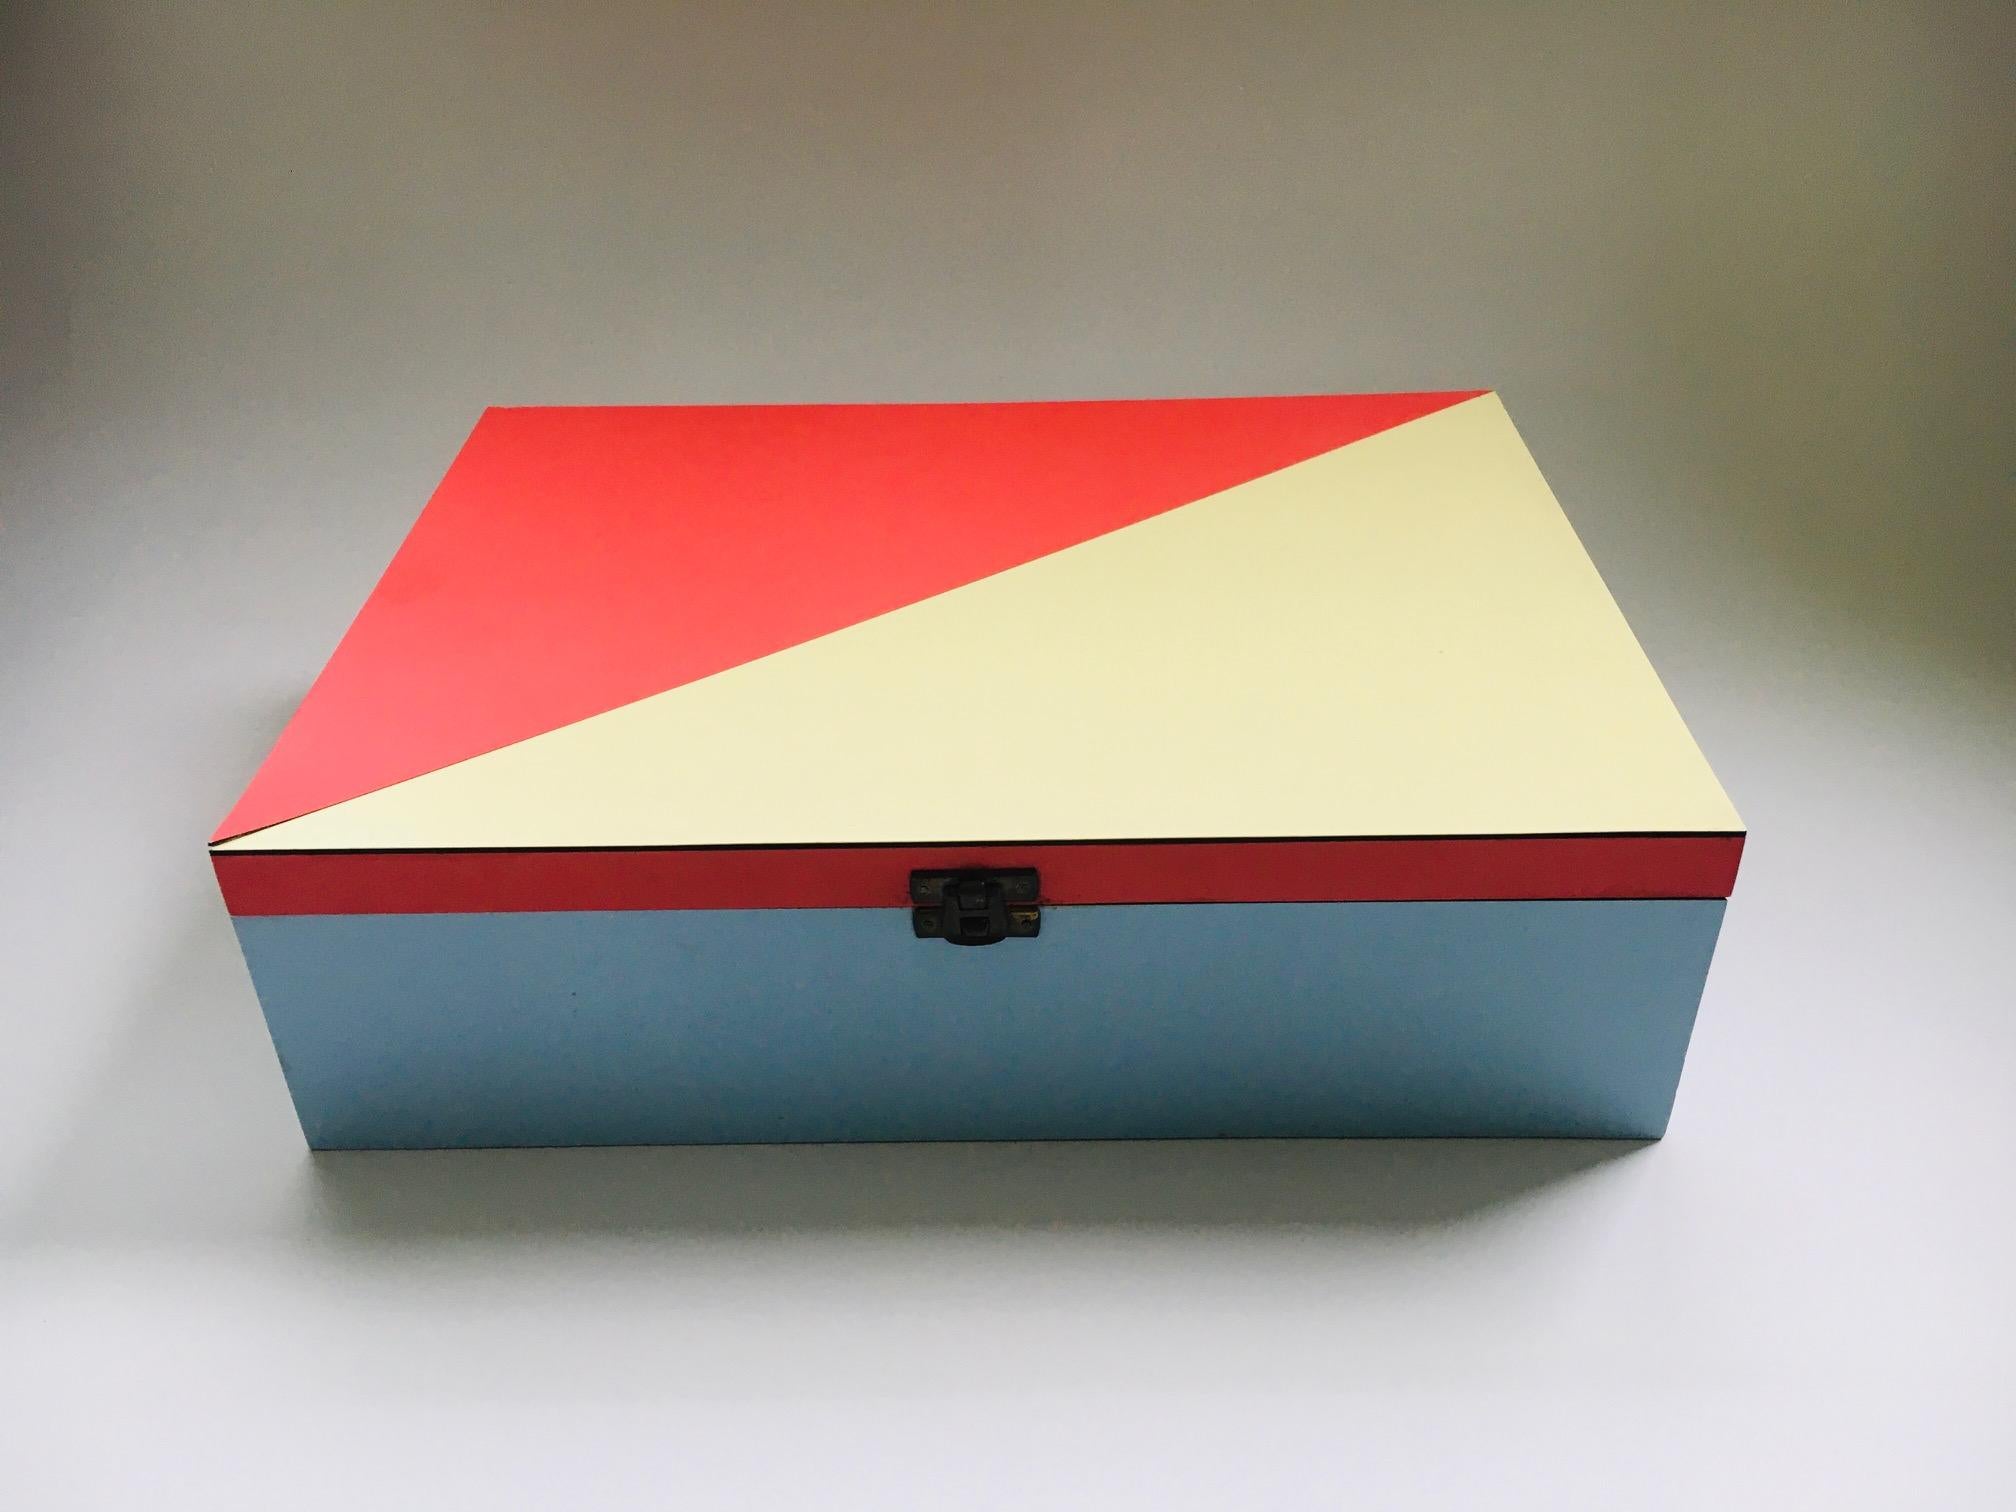 Mid-Century Modern Midcentury Modern Dutch Design STIJL Modernism Letter Box, 1950's Holland